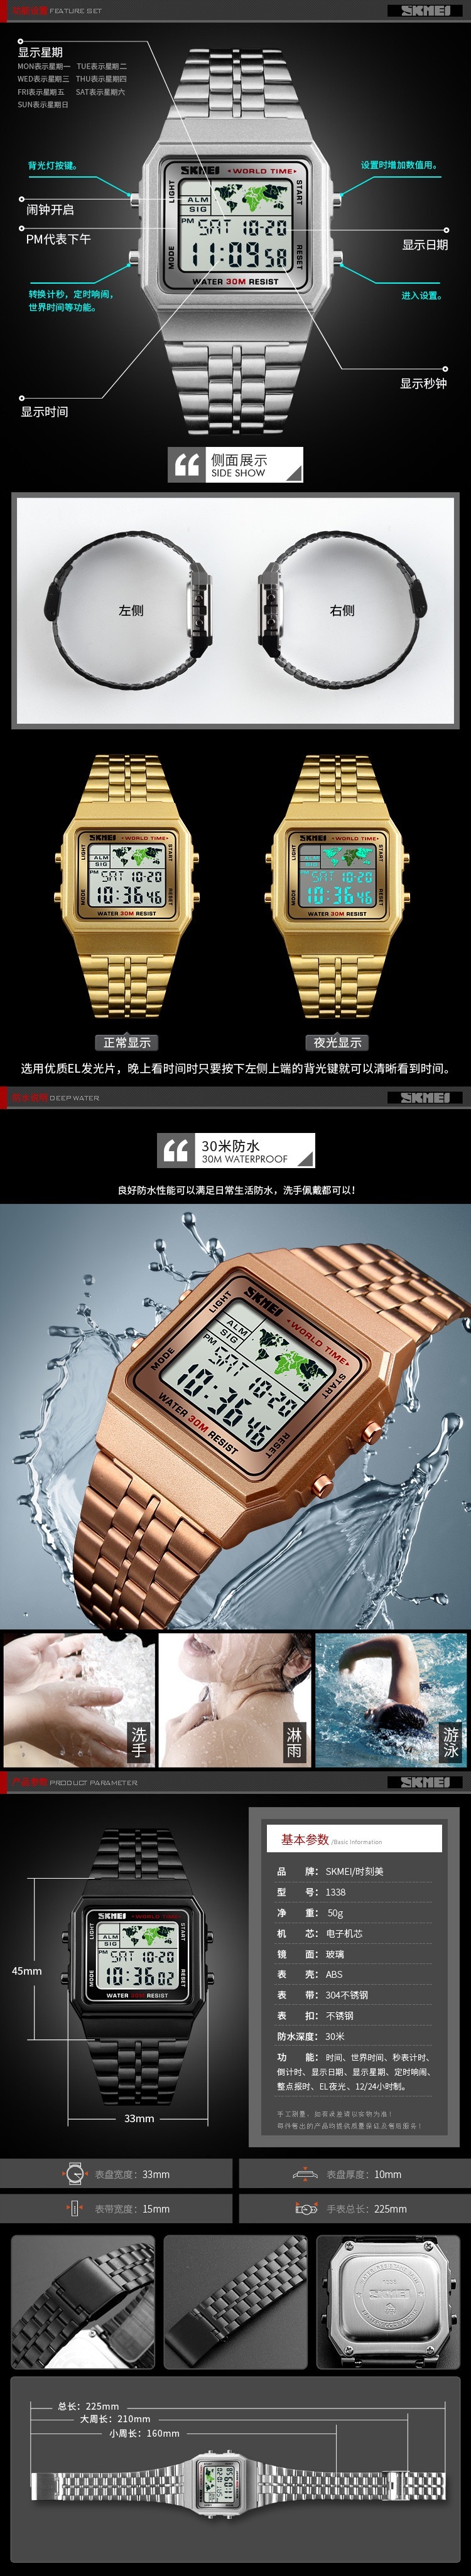 SKMEI新款商务时尚方形电子表 秒表倒计时世界时间多功能钢带手表详情1